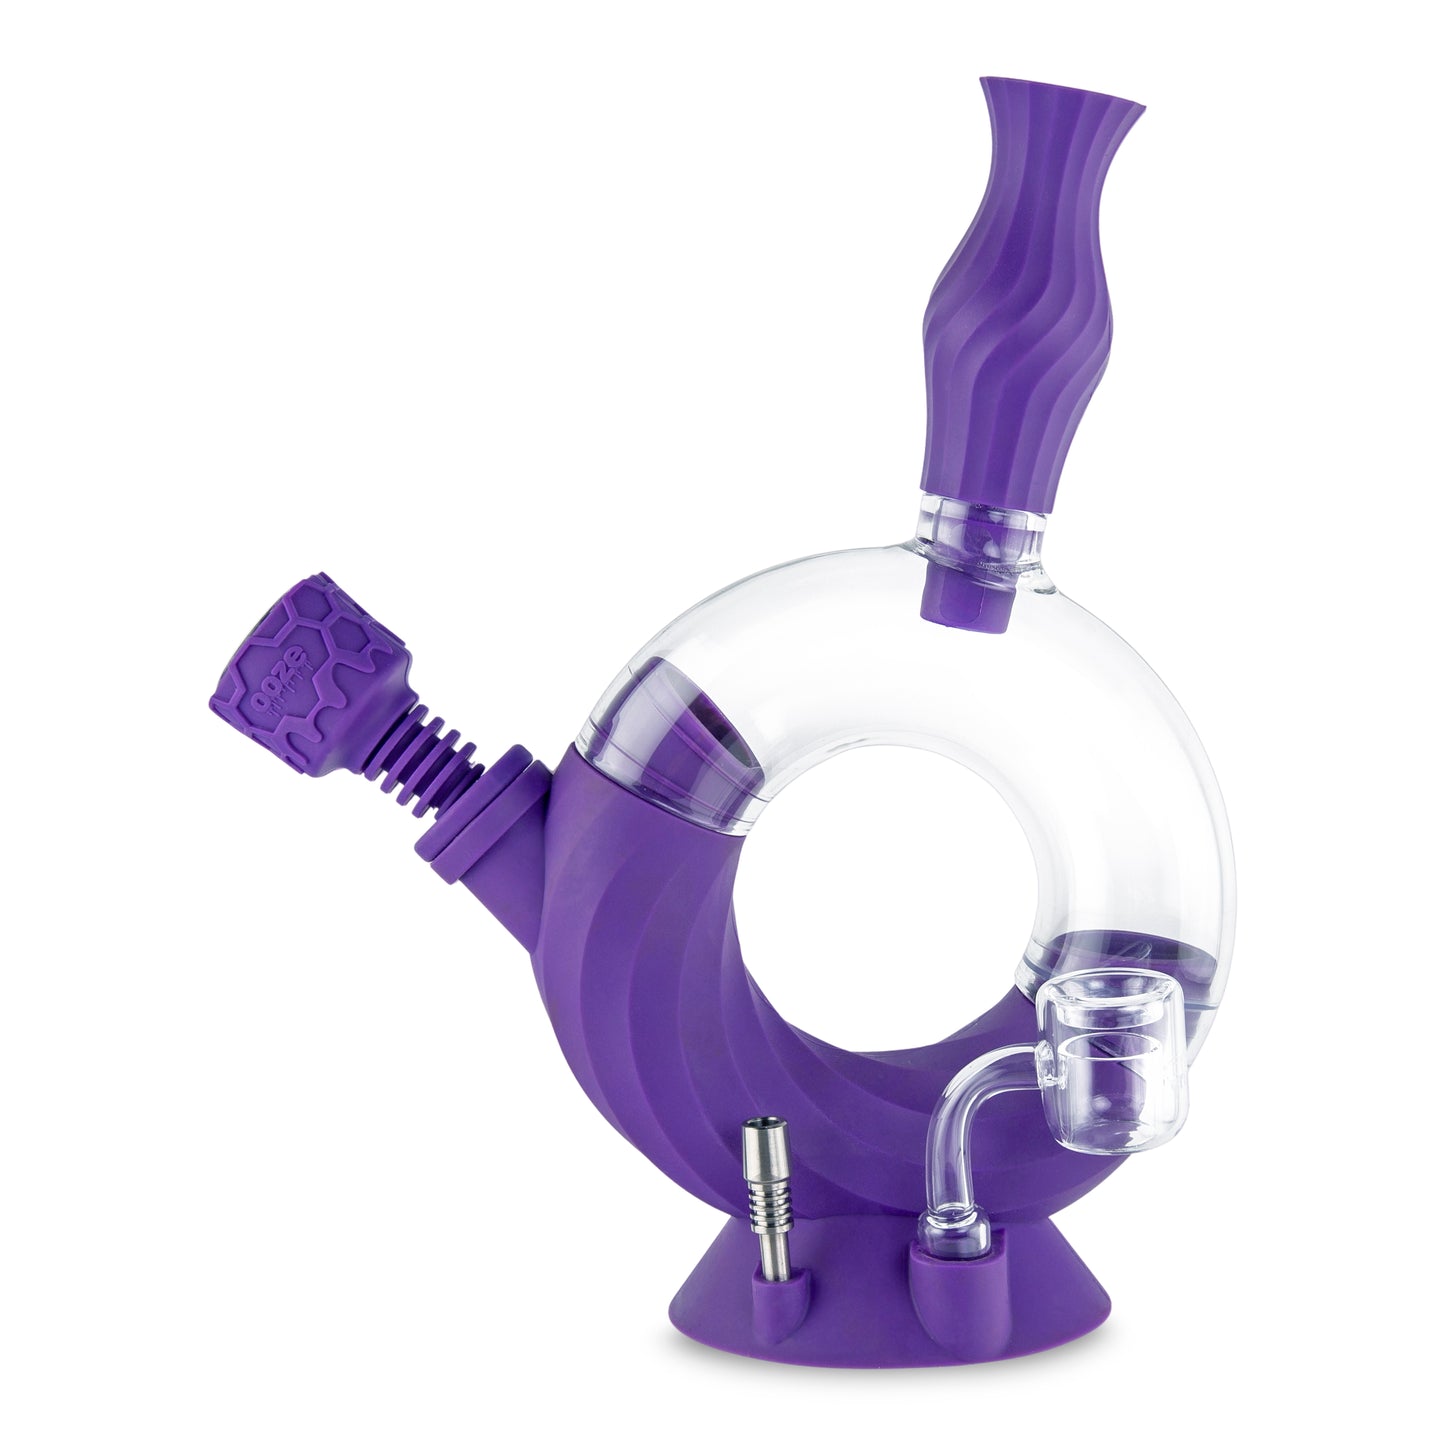 Ooze Ozone Silicone Water Pipe, Dab Rig & Dab Straw - Ultra Purple